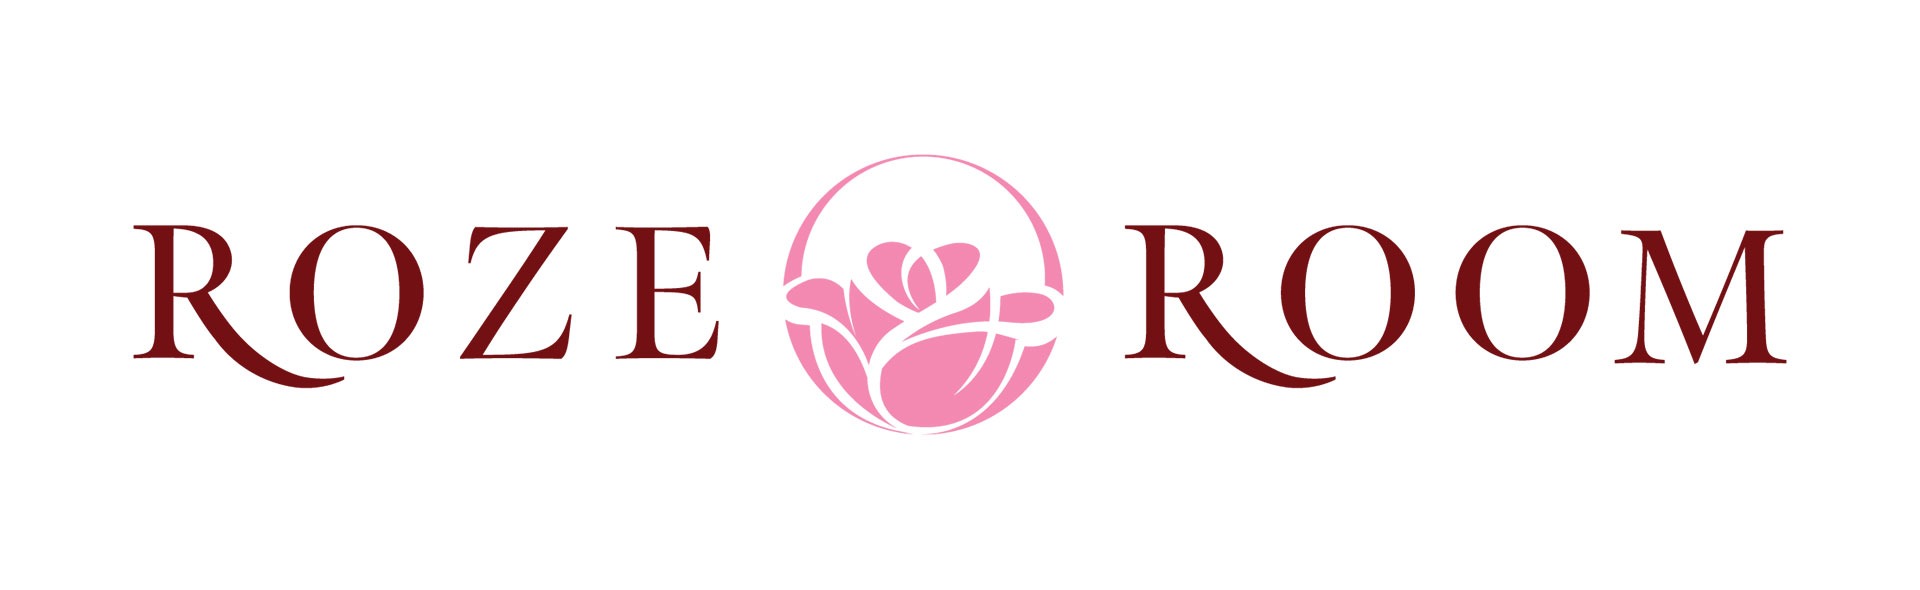 Roze Room color logo